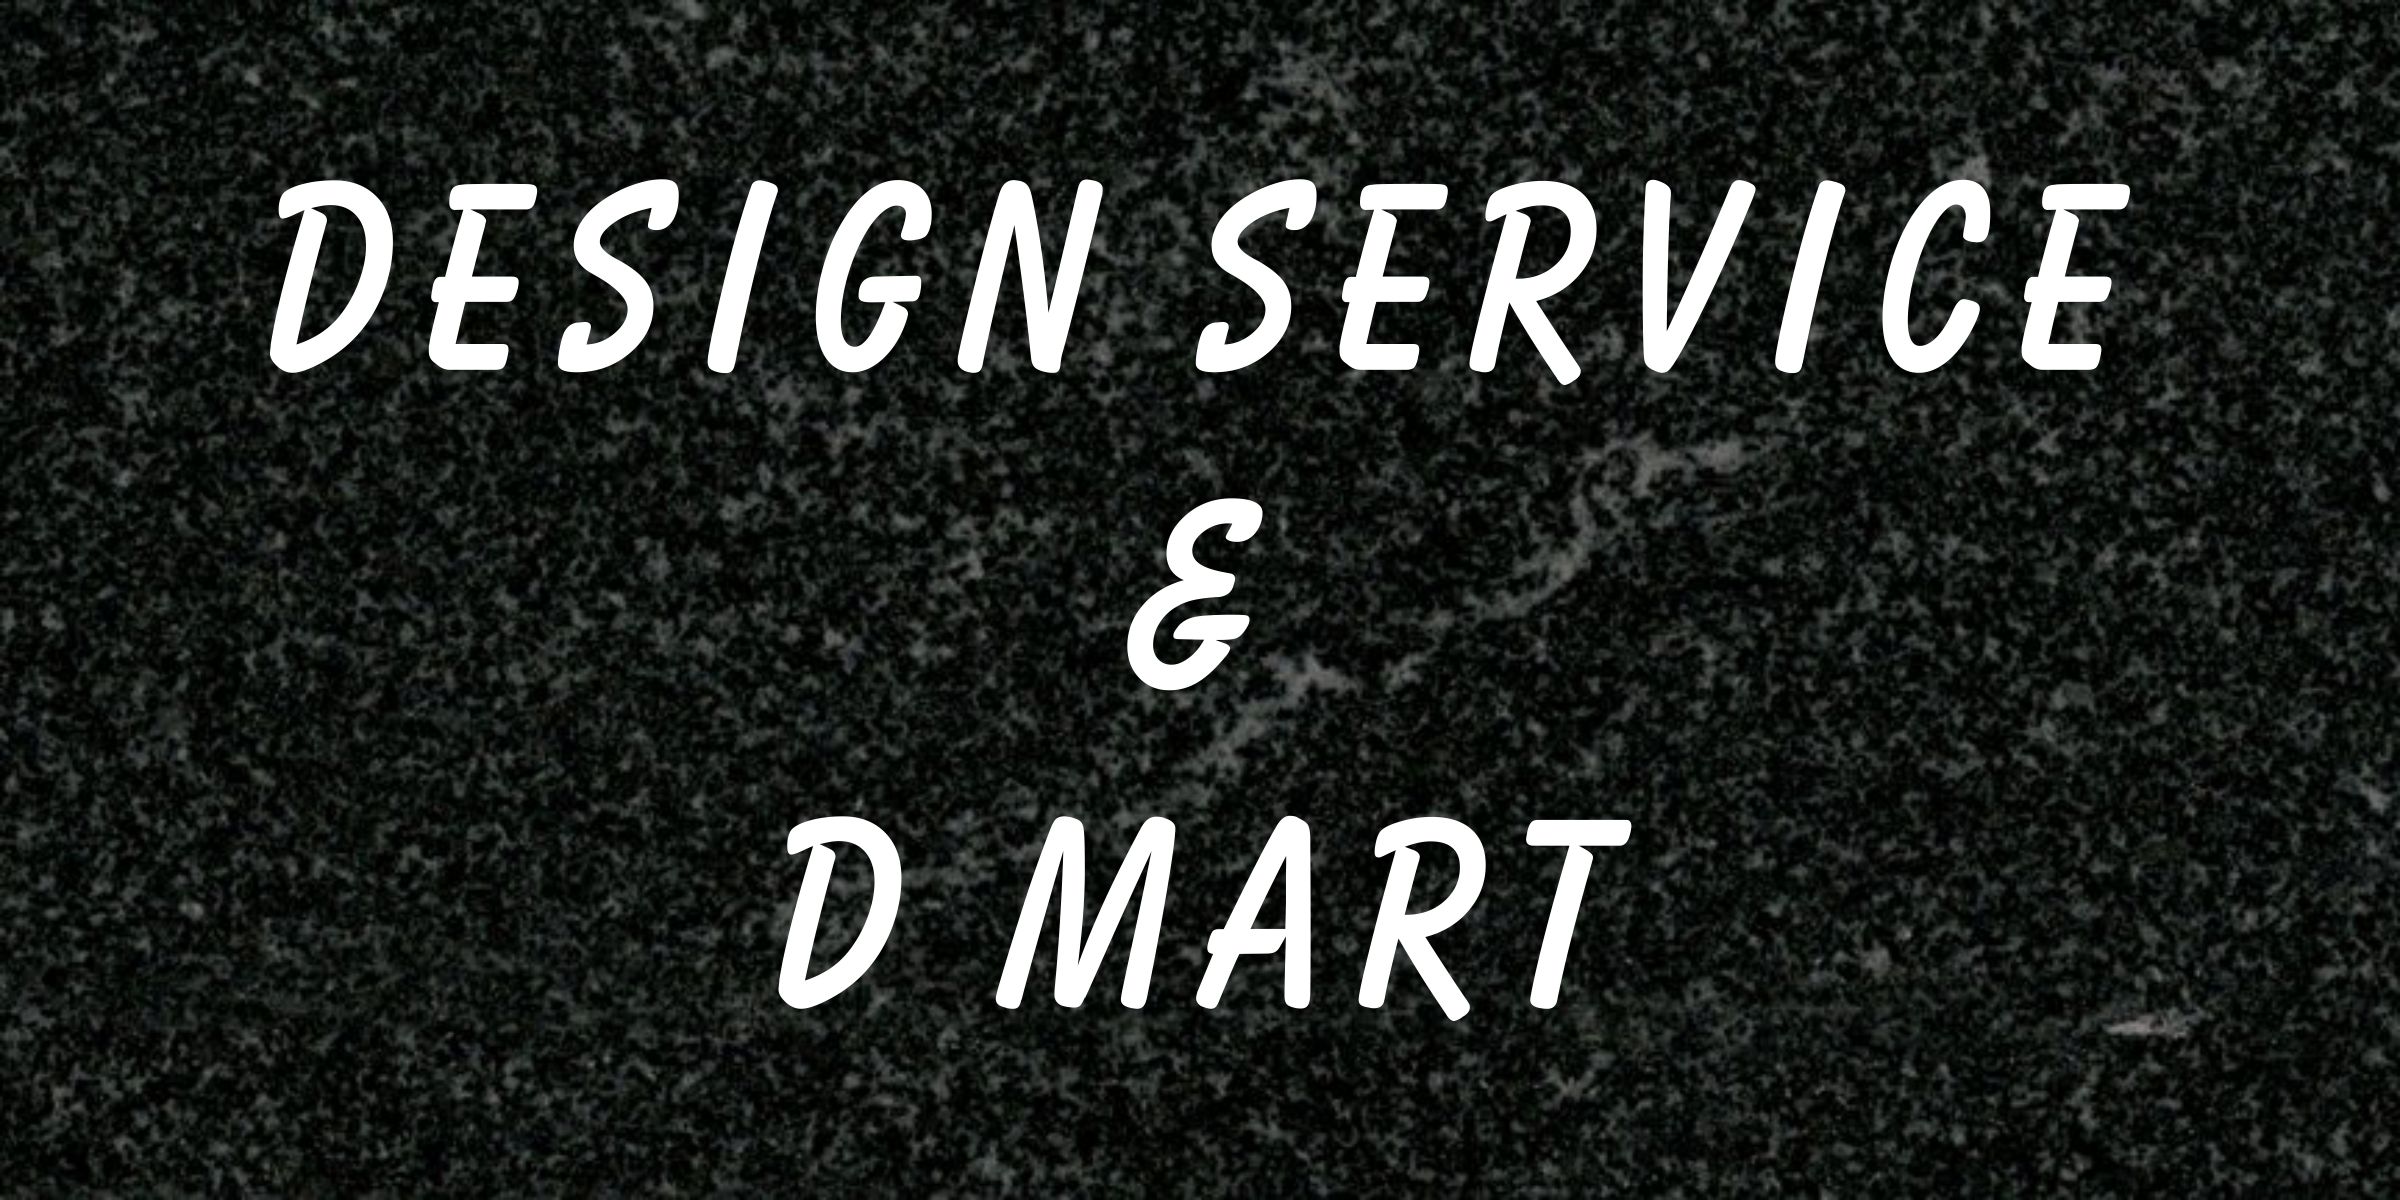 Design Service and D Mart